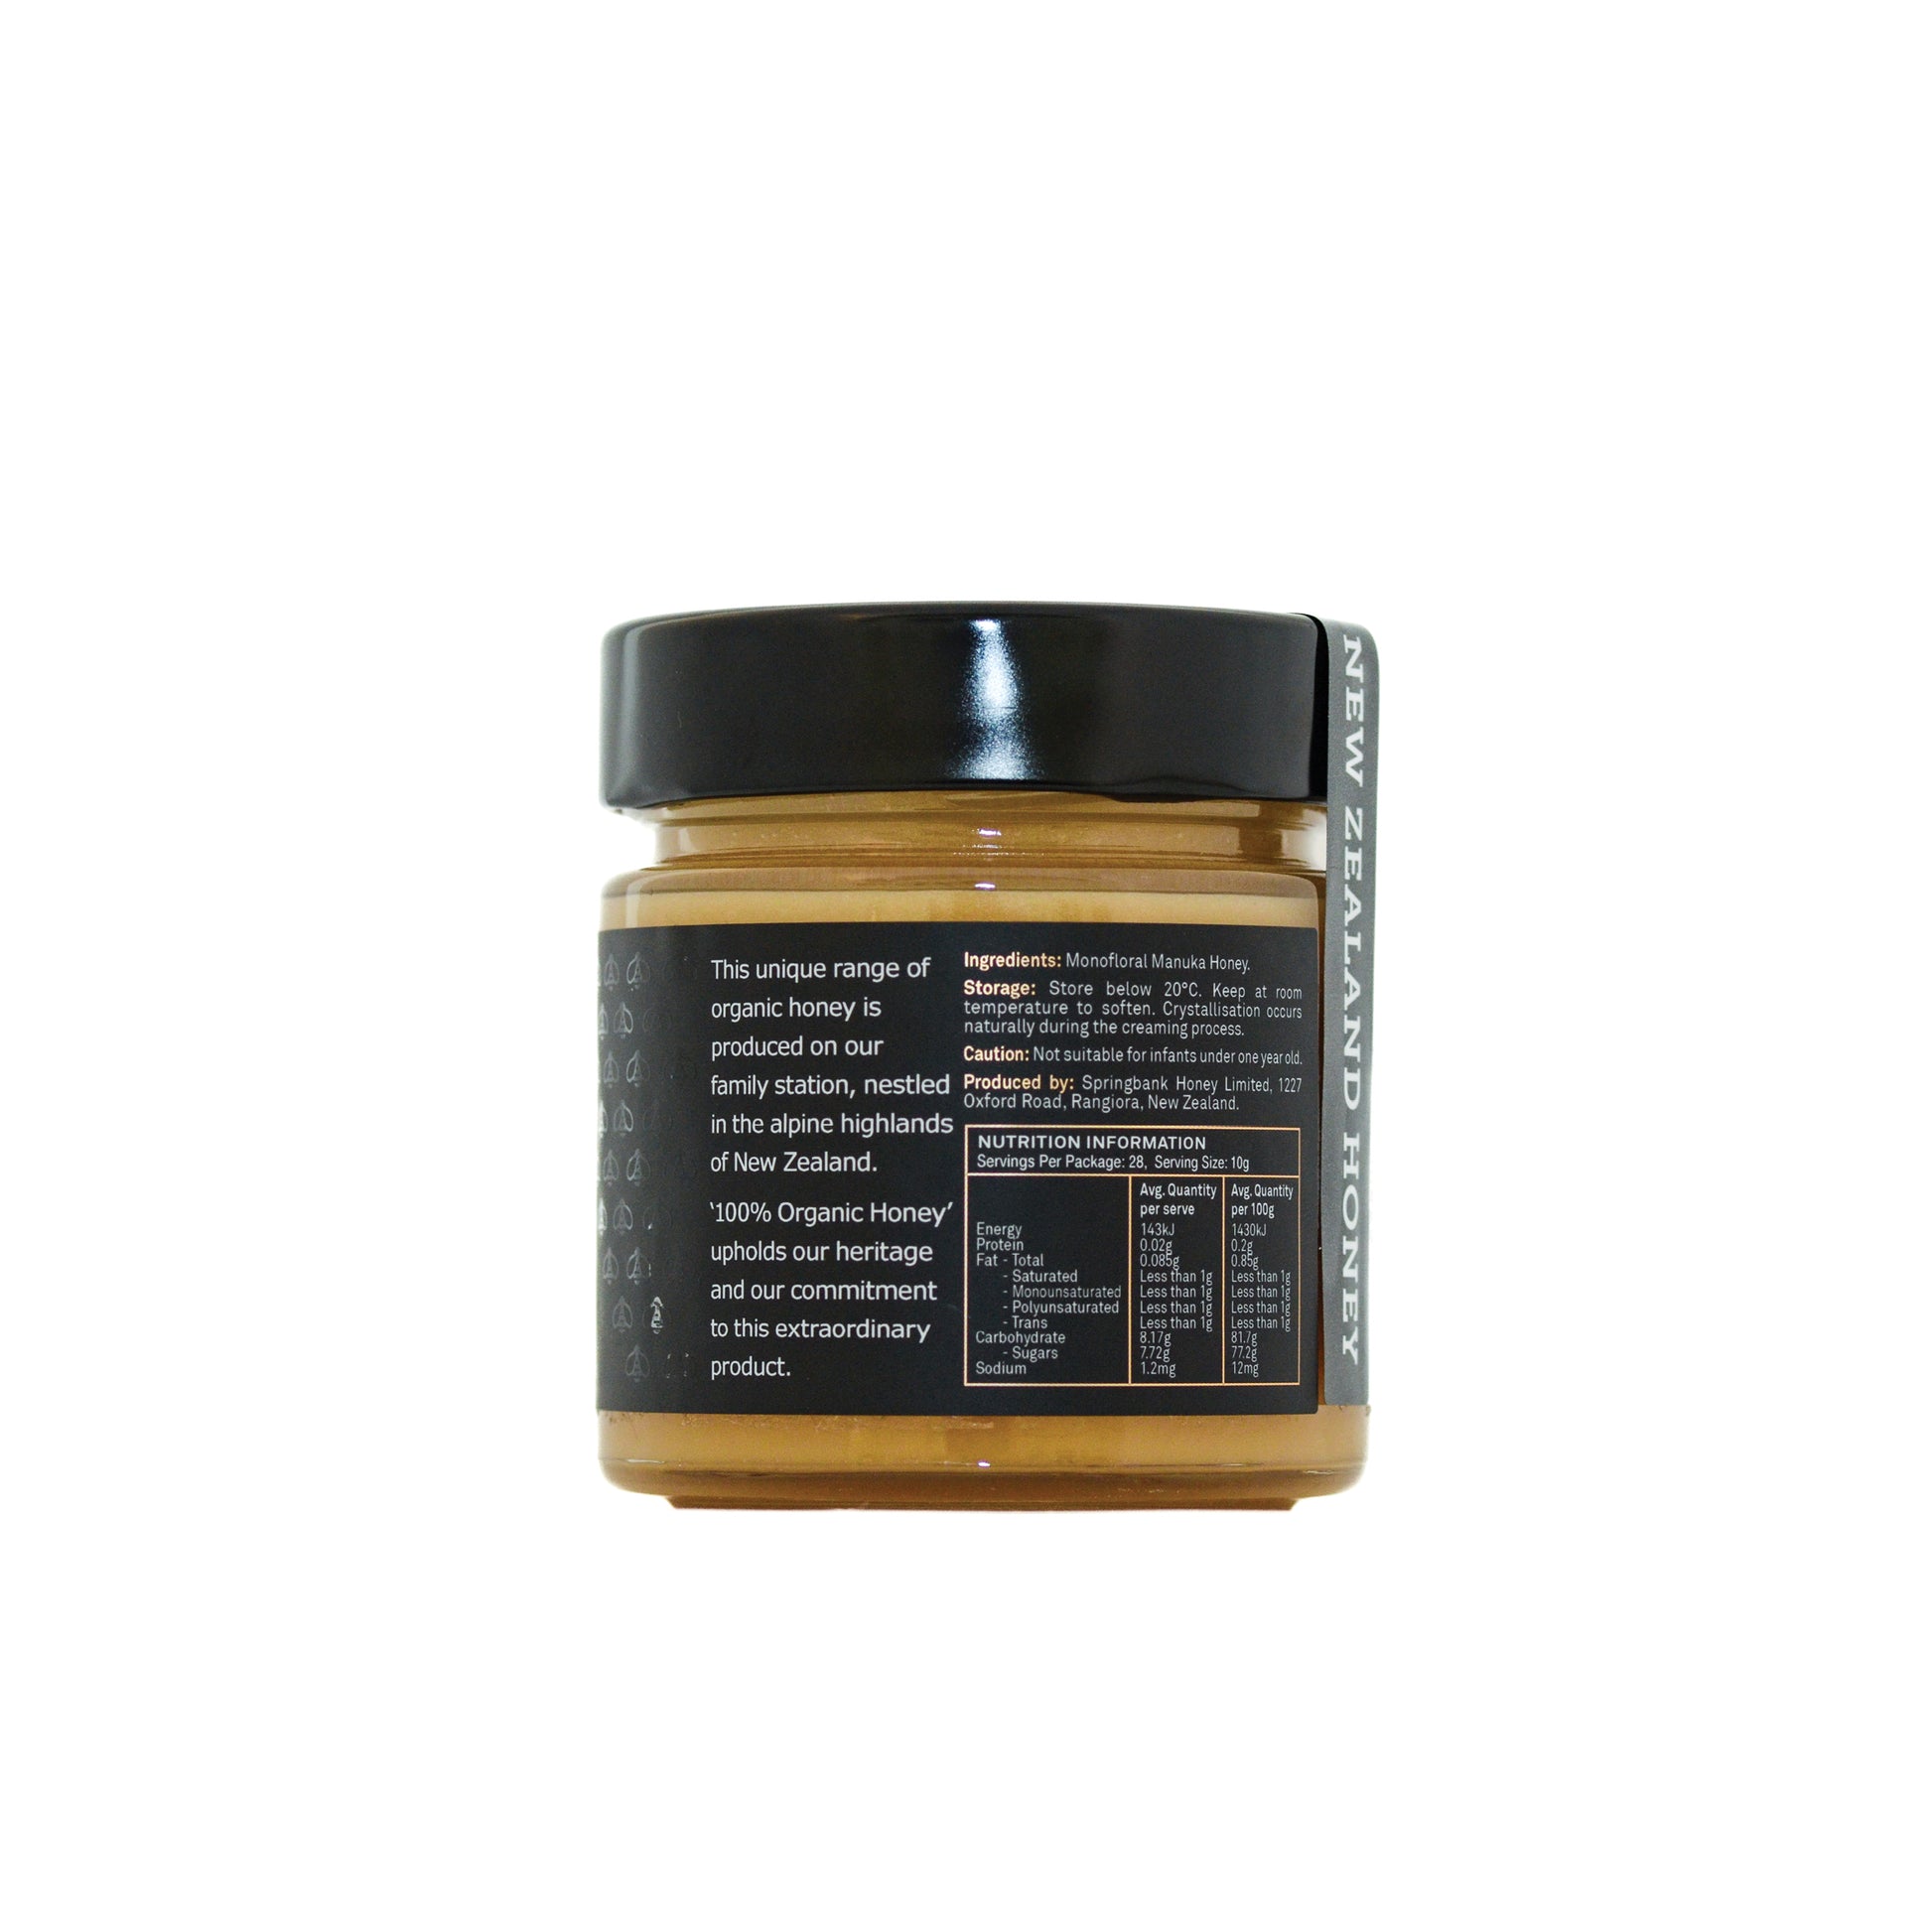 400 + MGO MANUKA | 10oz - Springbank Honey